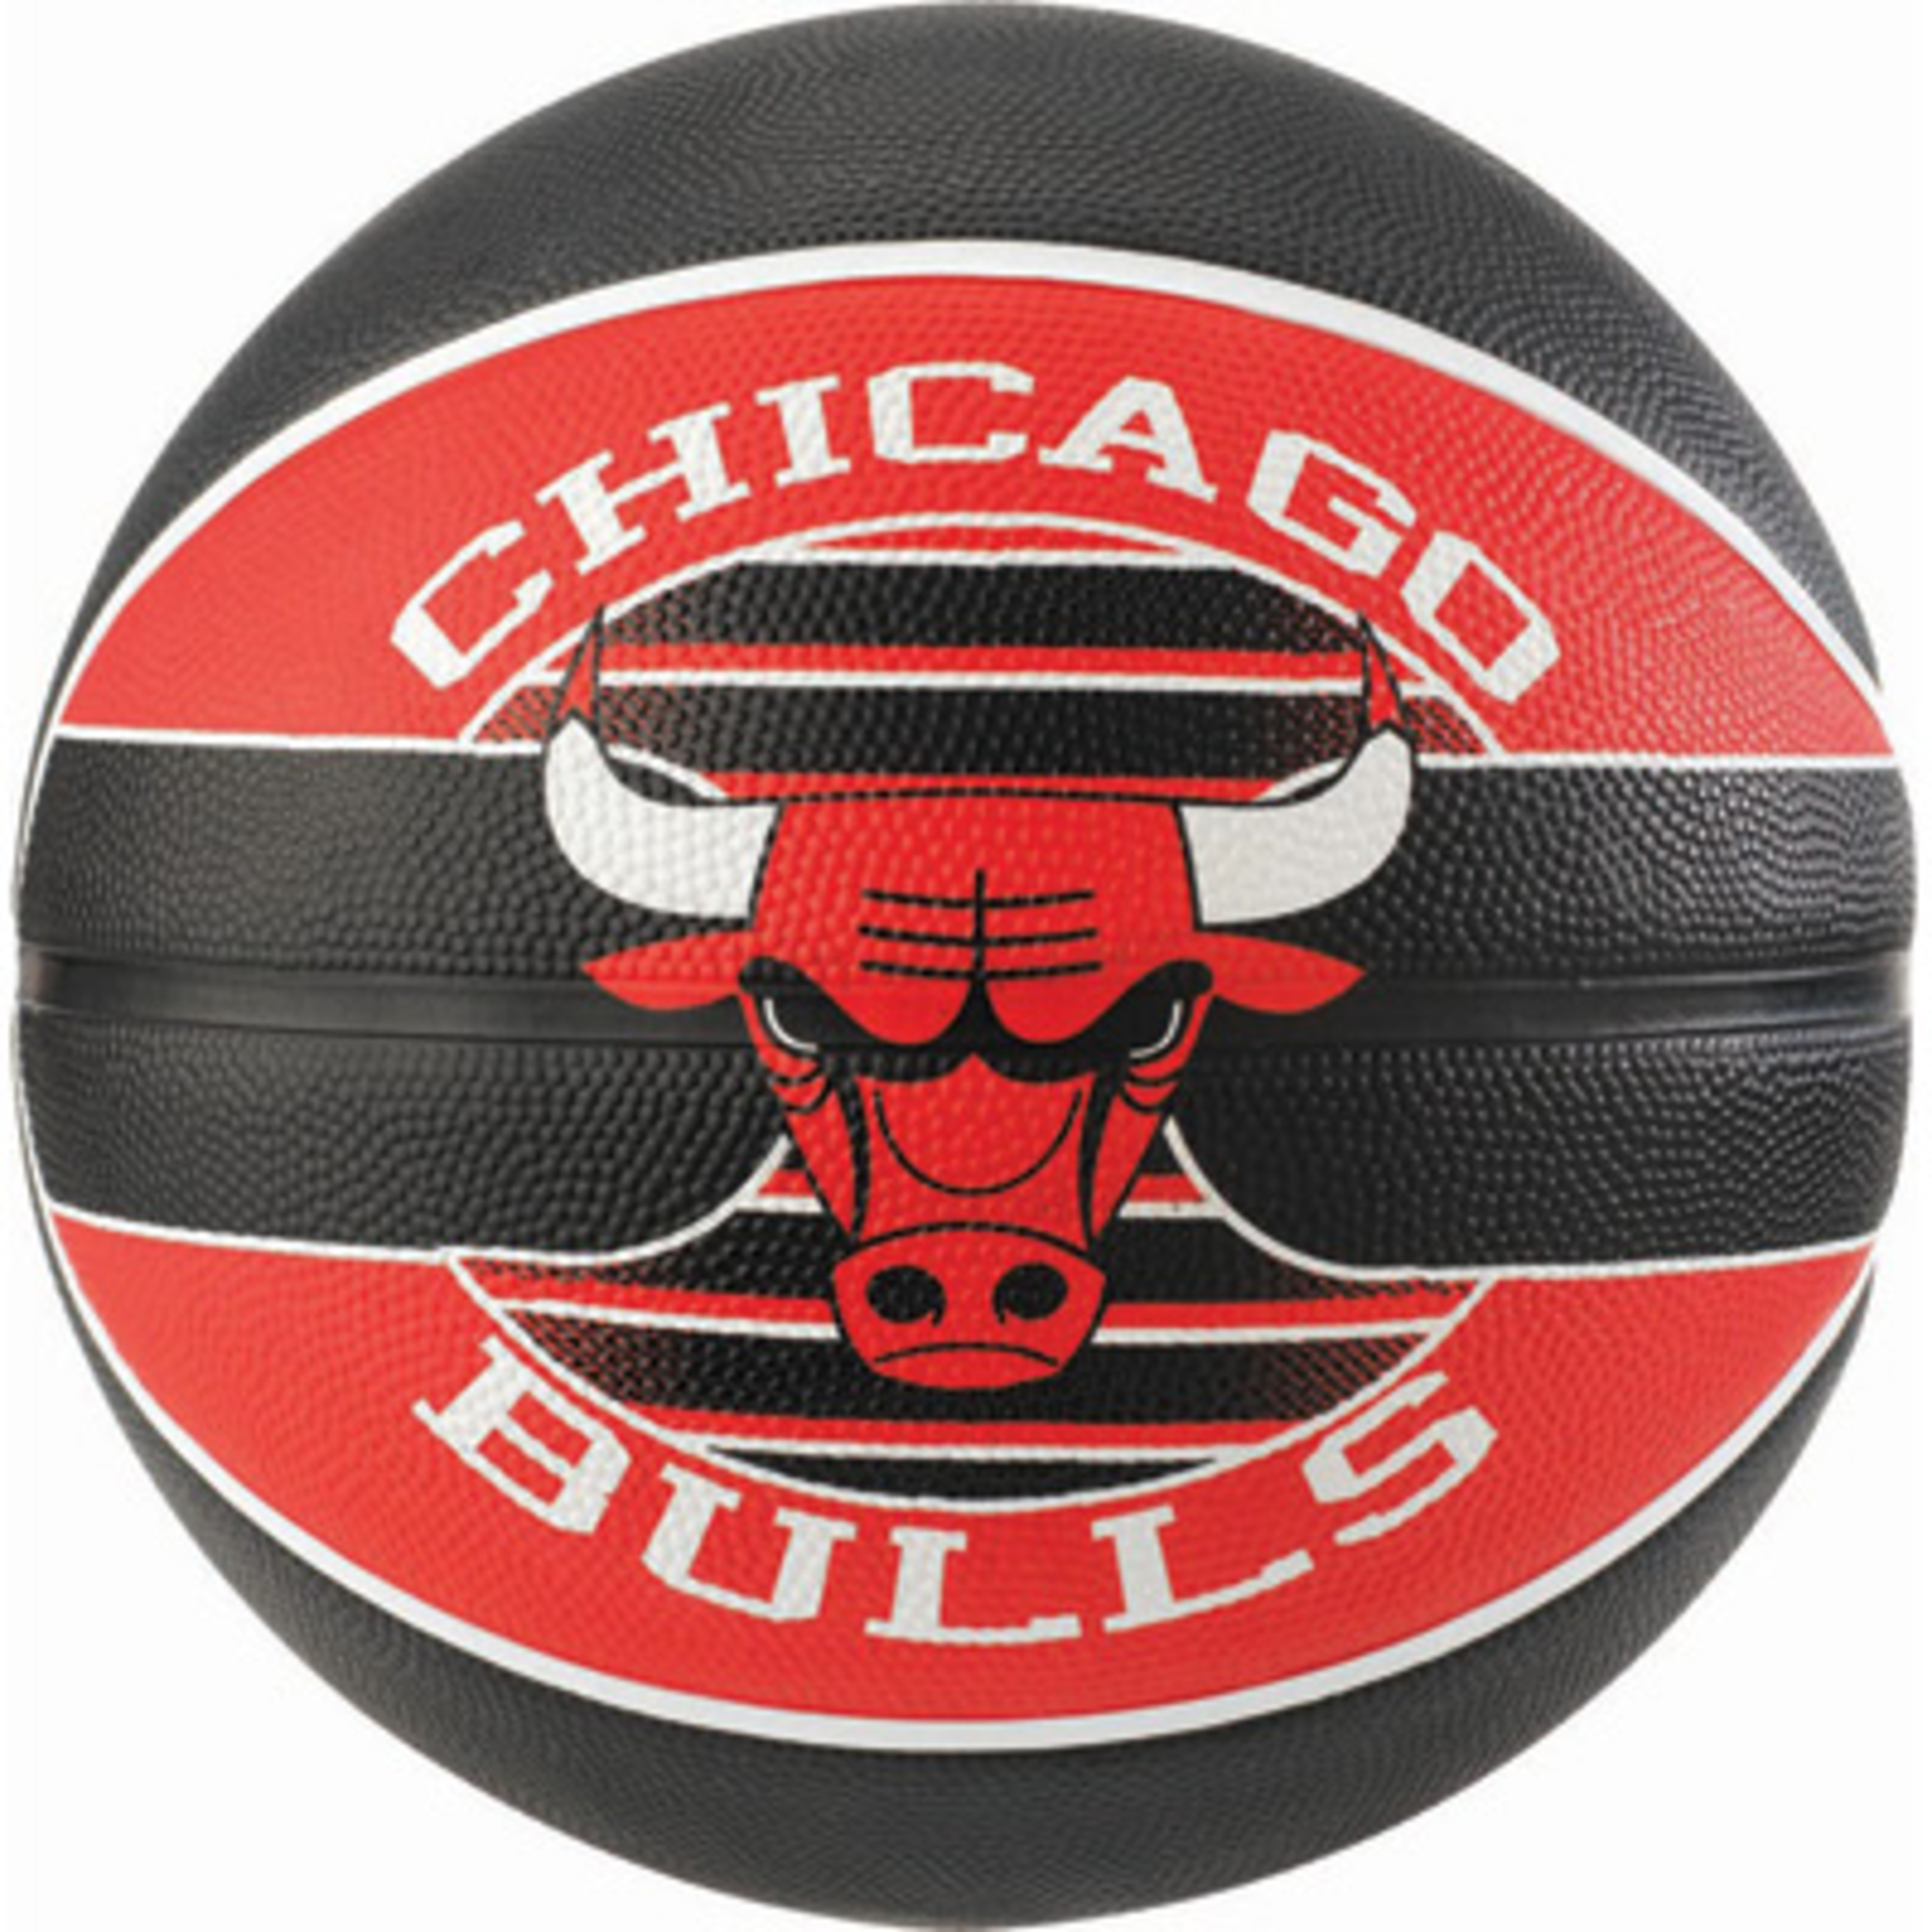 Nba Team Chicago Bulls Sz.7 (83-503z) Multicolor Spalding